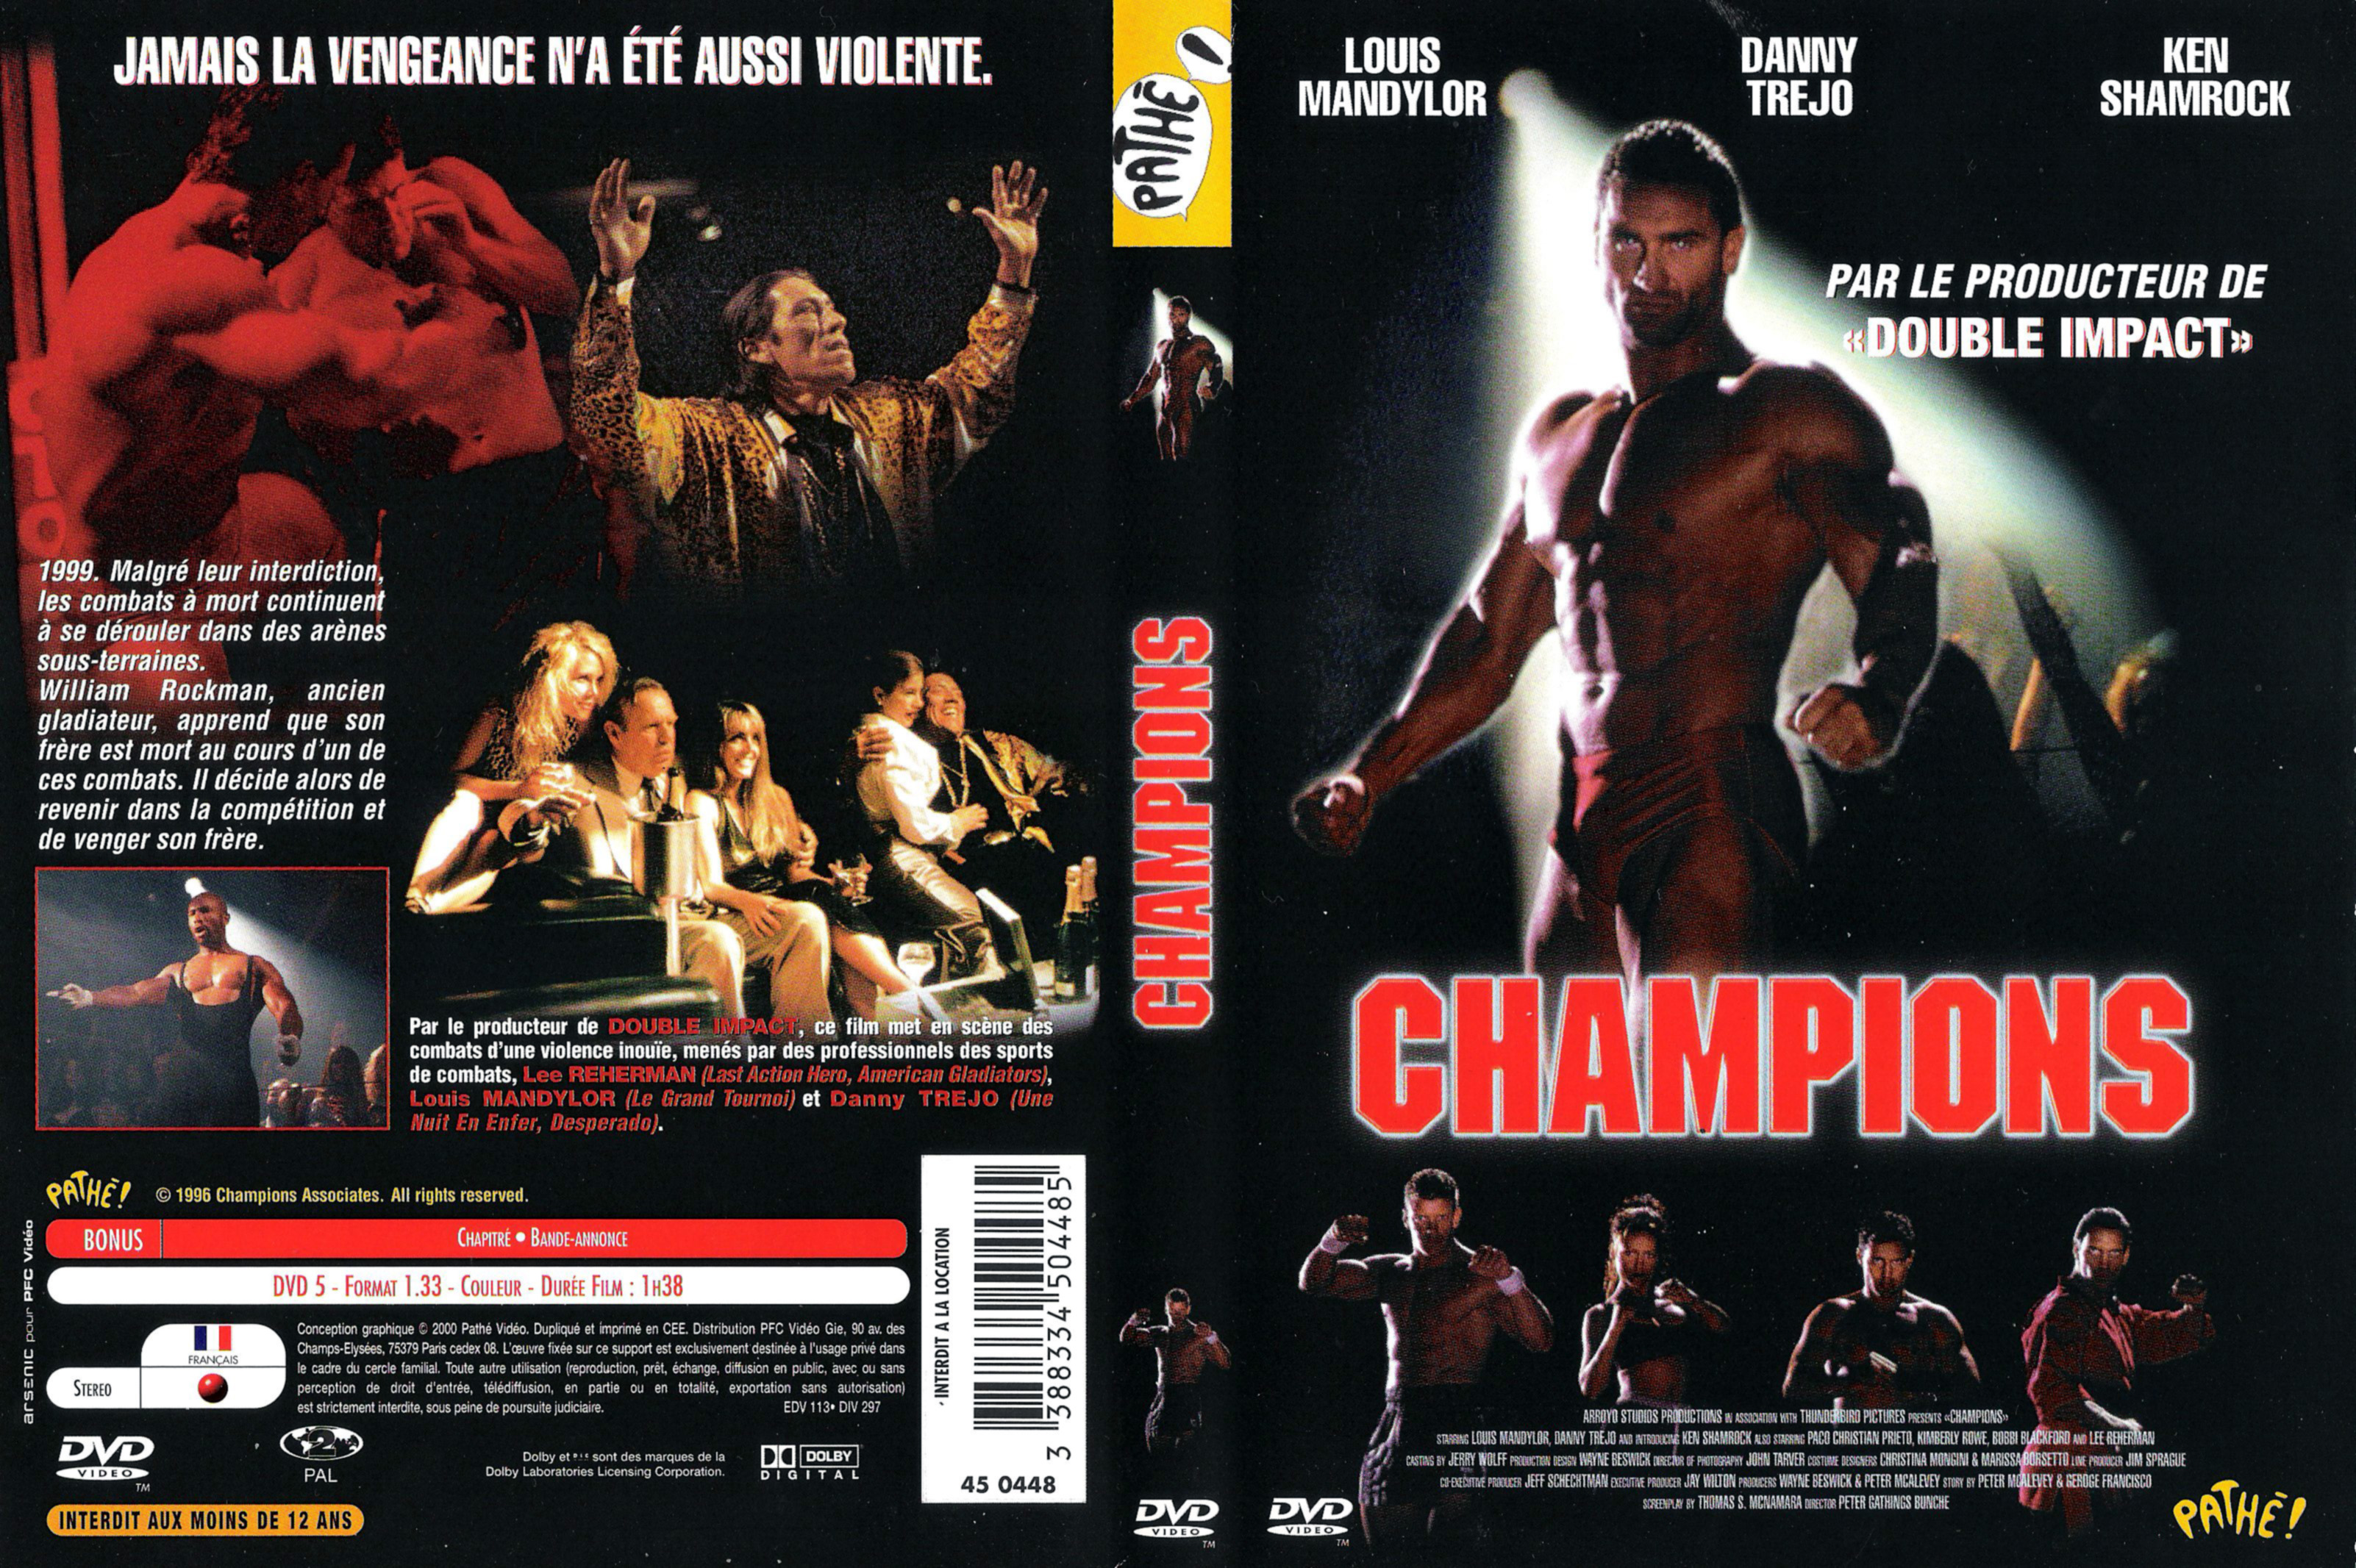 Jaquette DVD Champions v2